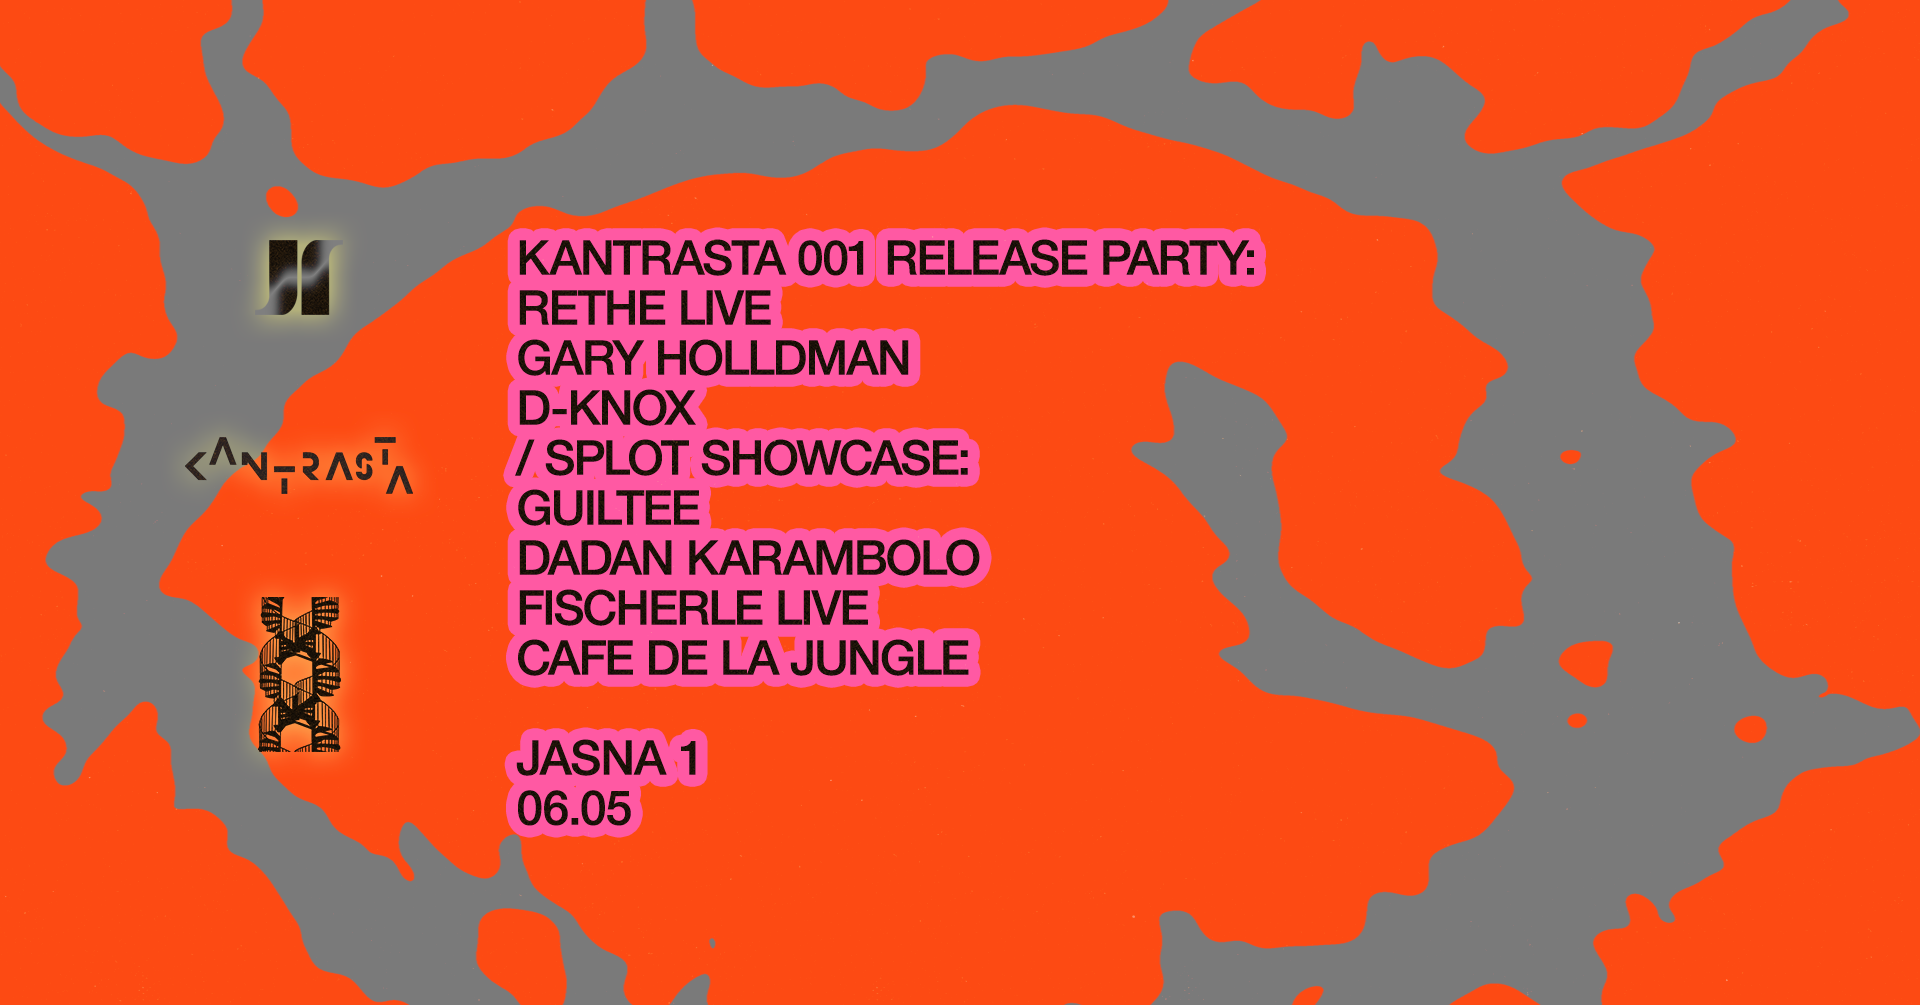 J1 - Kantrasta 001 Release Party: Rethe LIVE, Gary Holldman, D-knox / SPLOT Showcase - Página frontal